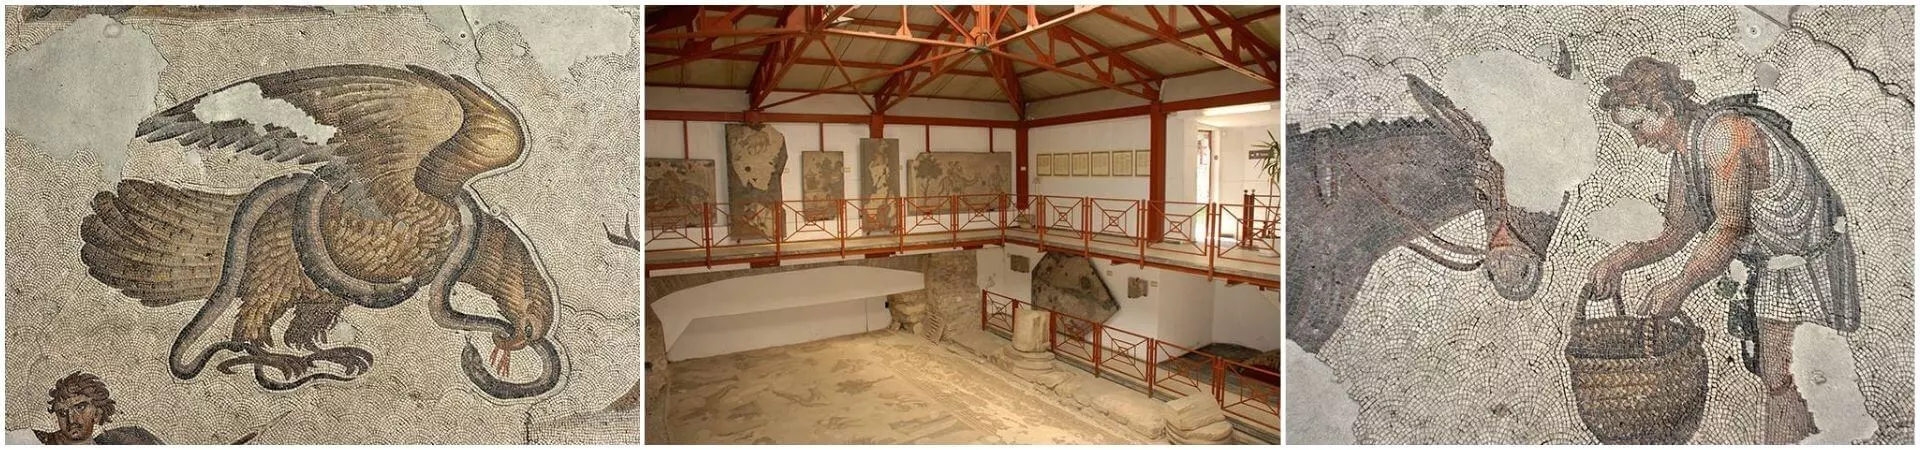 Great Palace Mosaics Museum Entrance